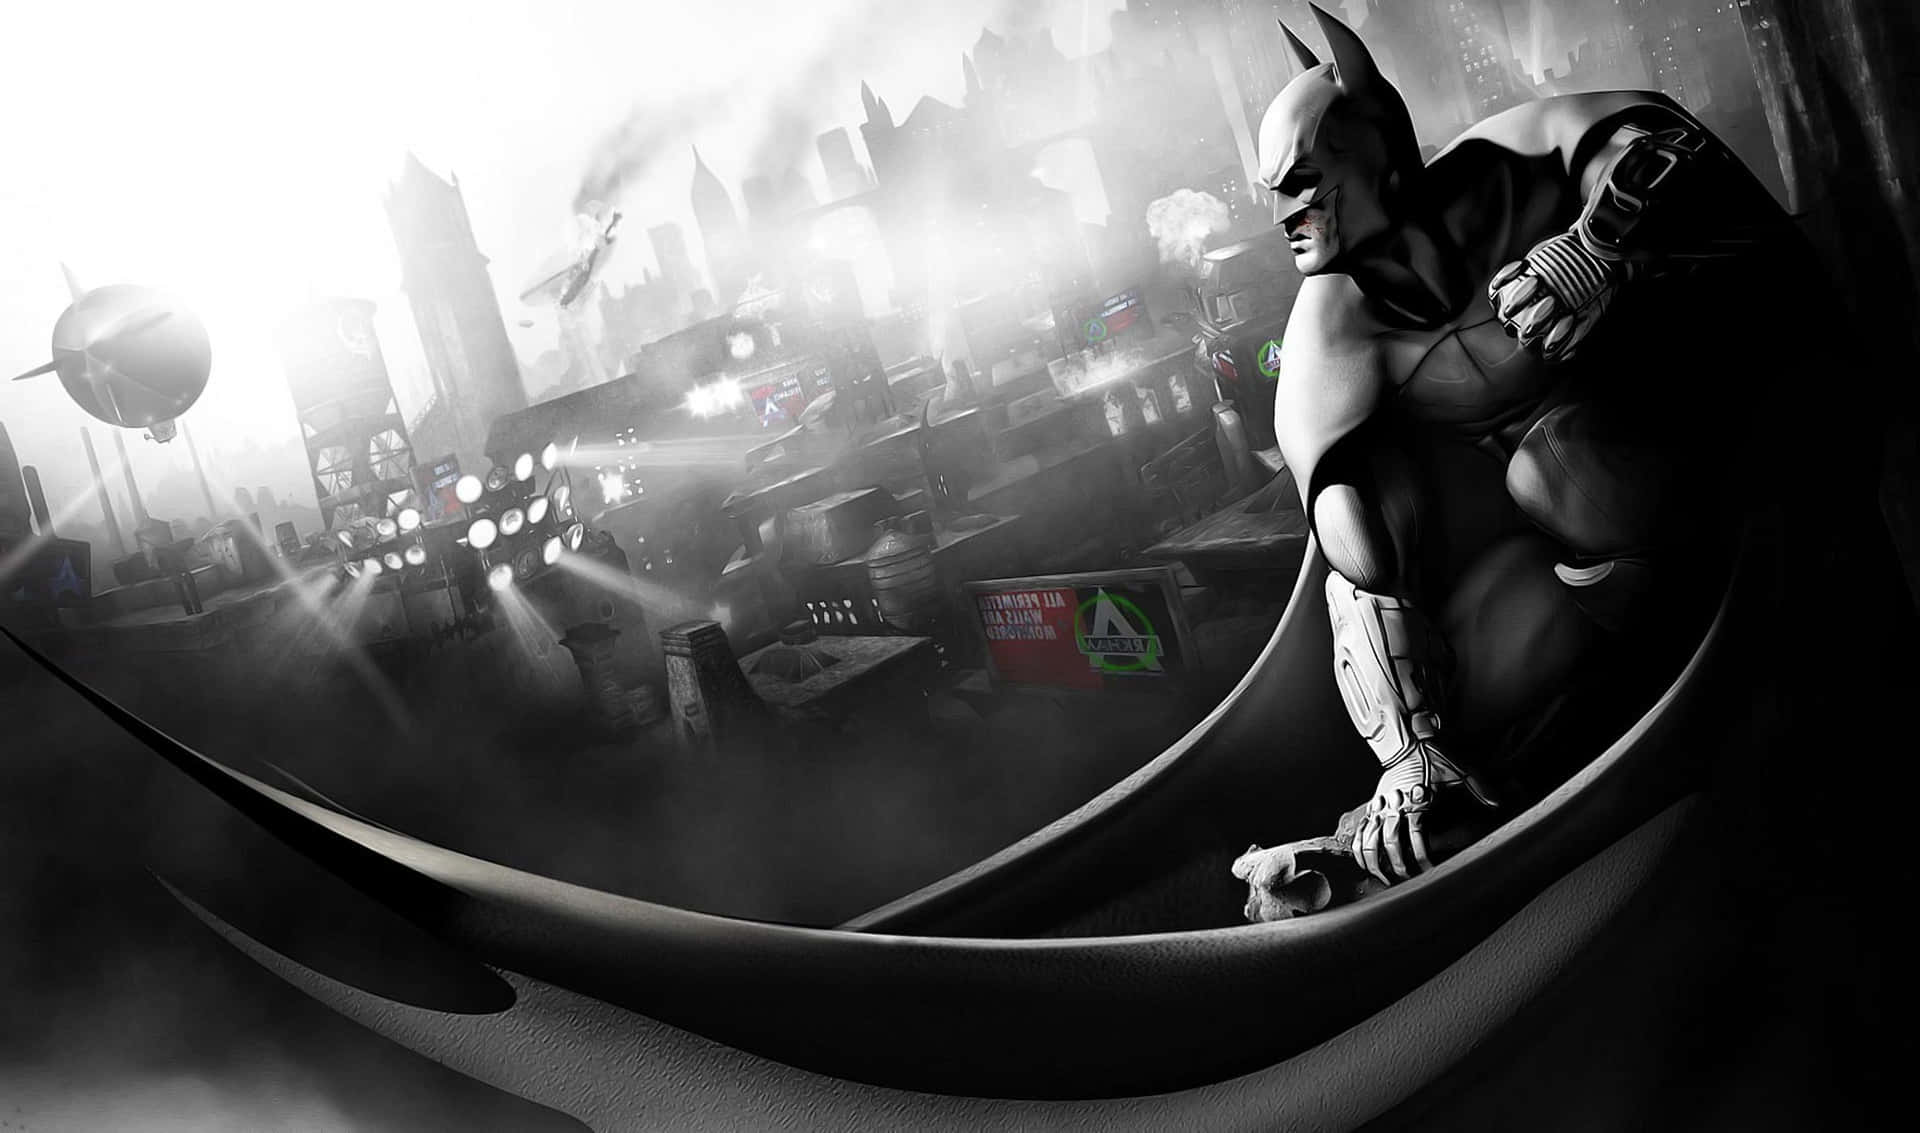 Batmanpatrullerar De Mörka Gatorna I Gotham.